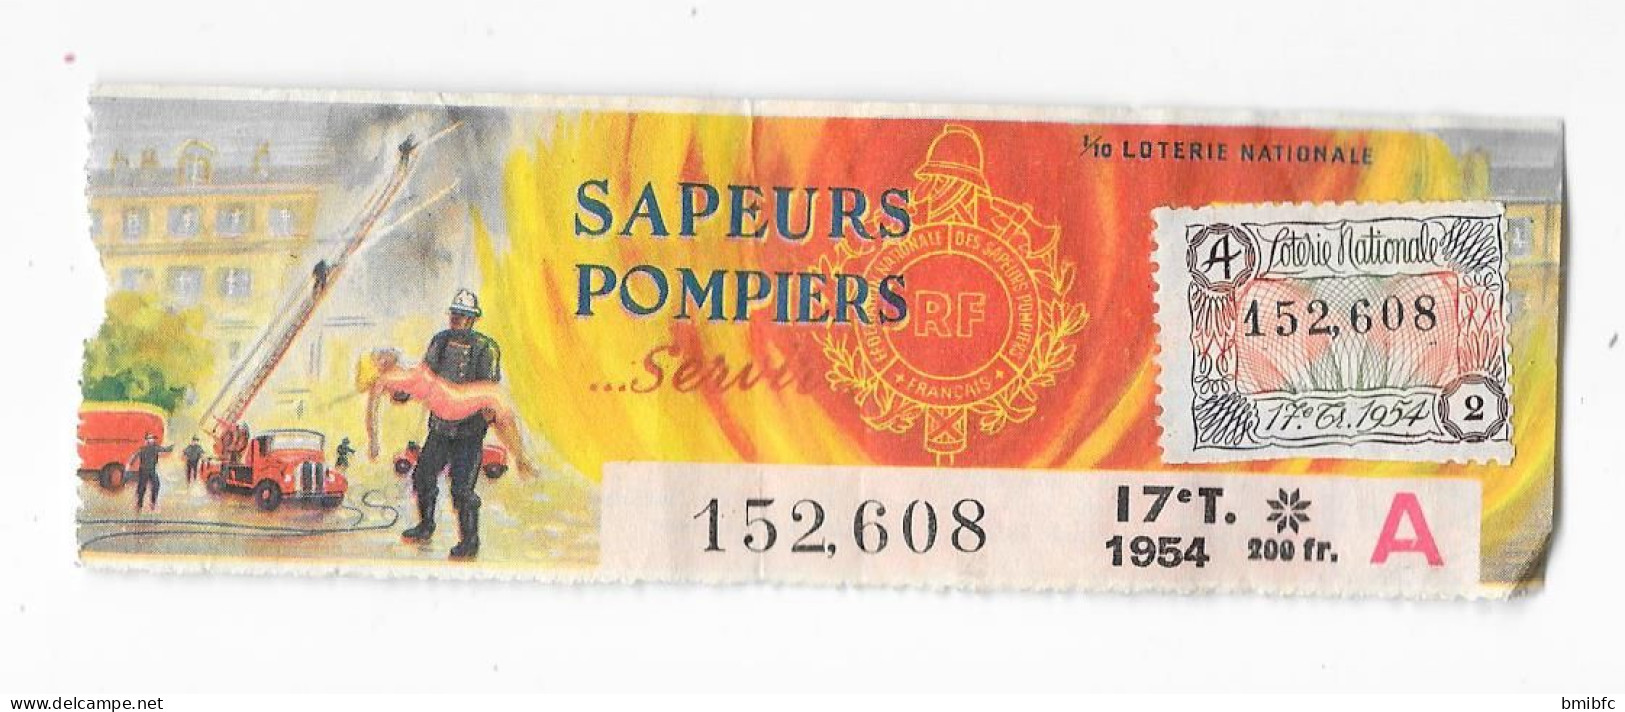 1954 - LOTERIE NATIONALE -  SAPEURS POMPIERS ......Servir  N° 152,608 - Billets De Loterie